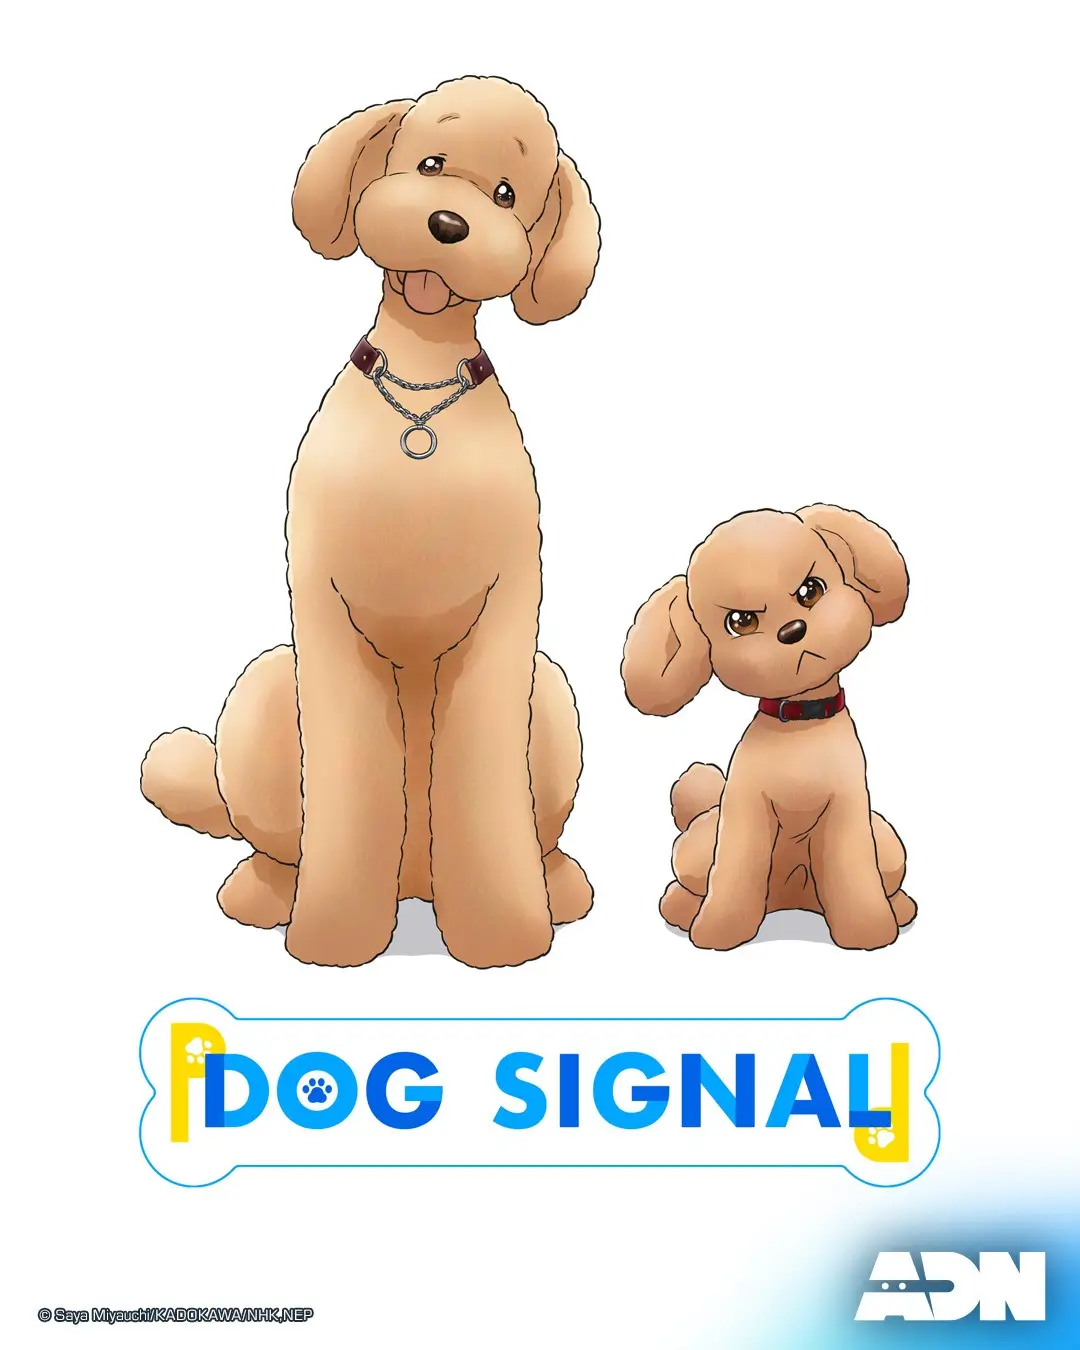 Dog Signal (ドッグシグナル) : สัญญาณหมา - เว็บดูหนังดีดี ดูหนังออนไลน์ 2022 หนังใหม่ชนโรง